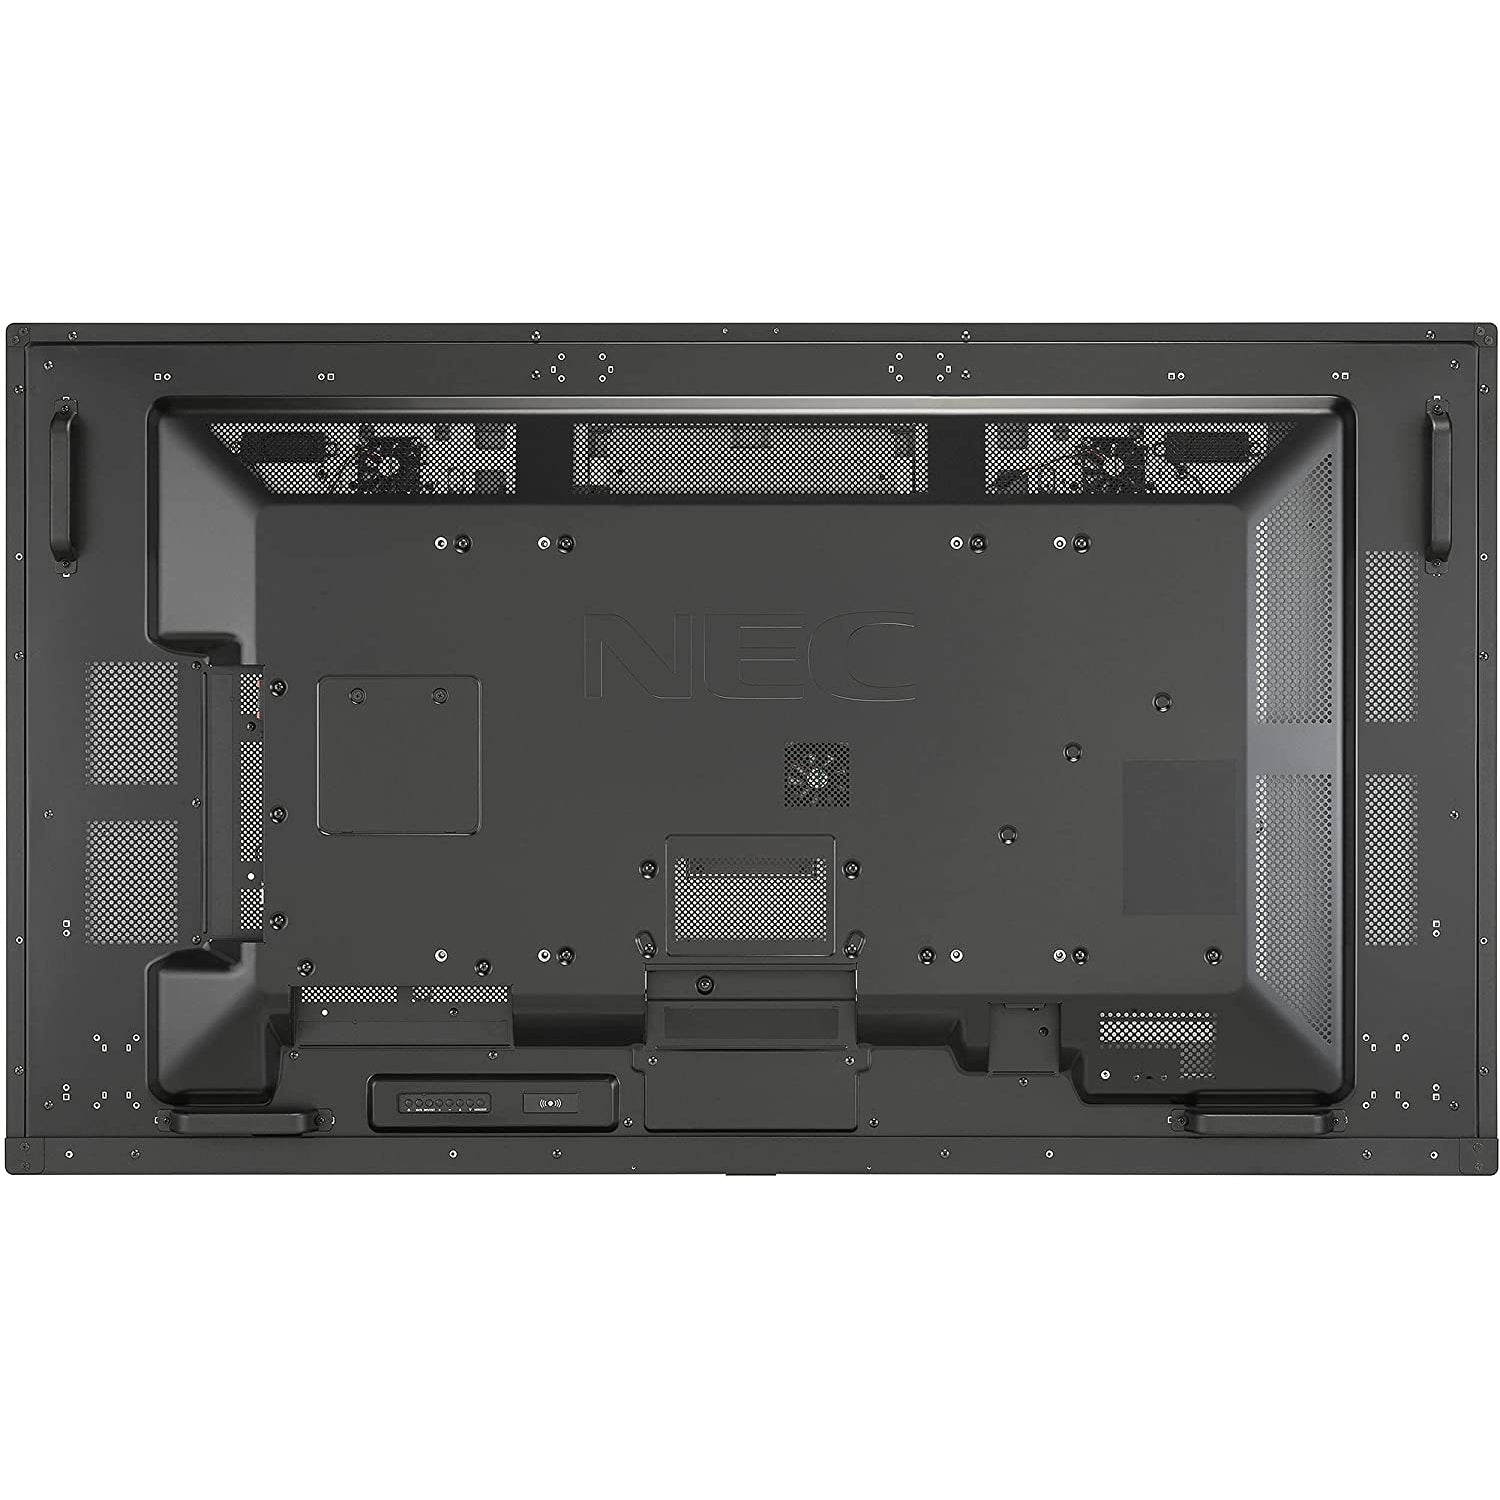 NEC C651Q 4K UHD Commercial Display - Black